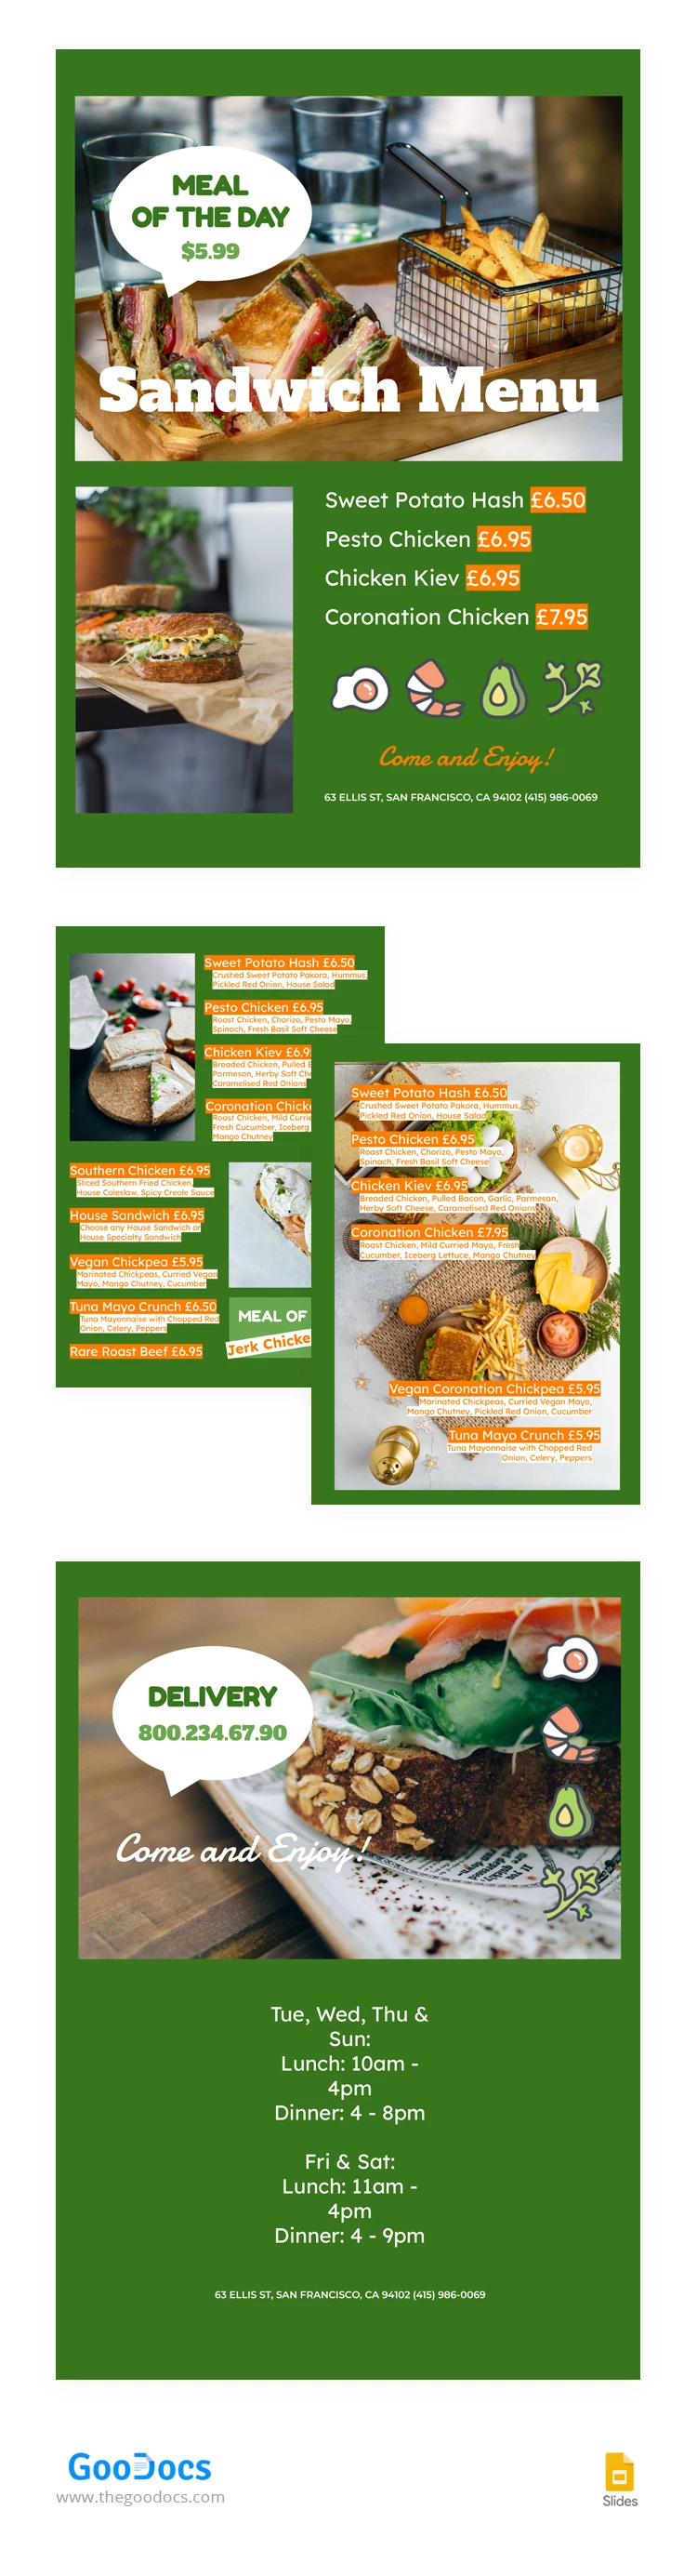 Menu del Ristorante Sandwich Green - free Google Docs Template - 10067083